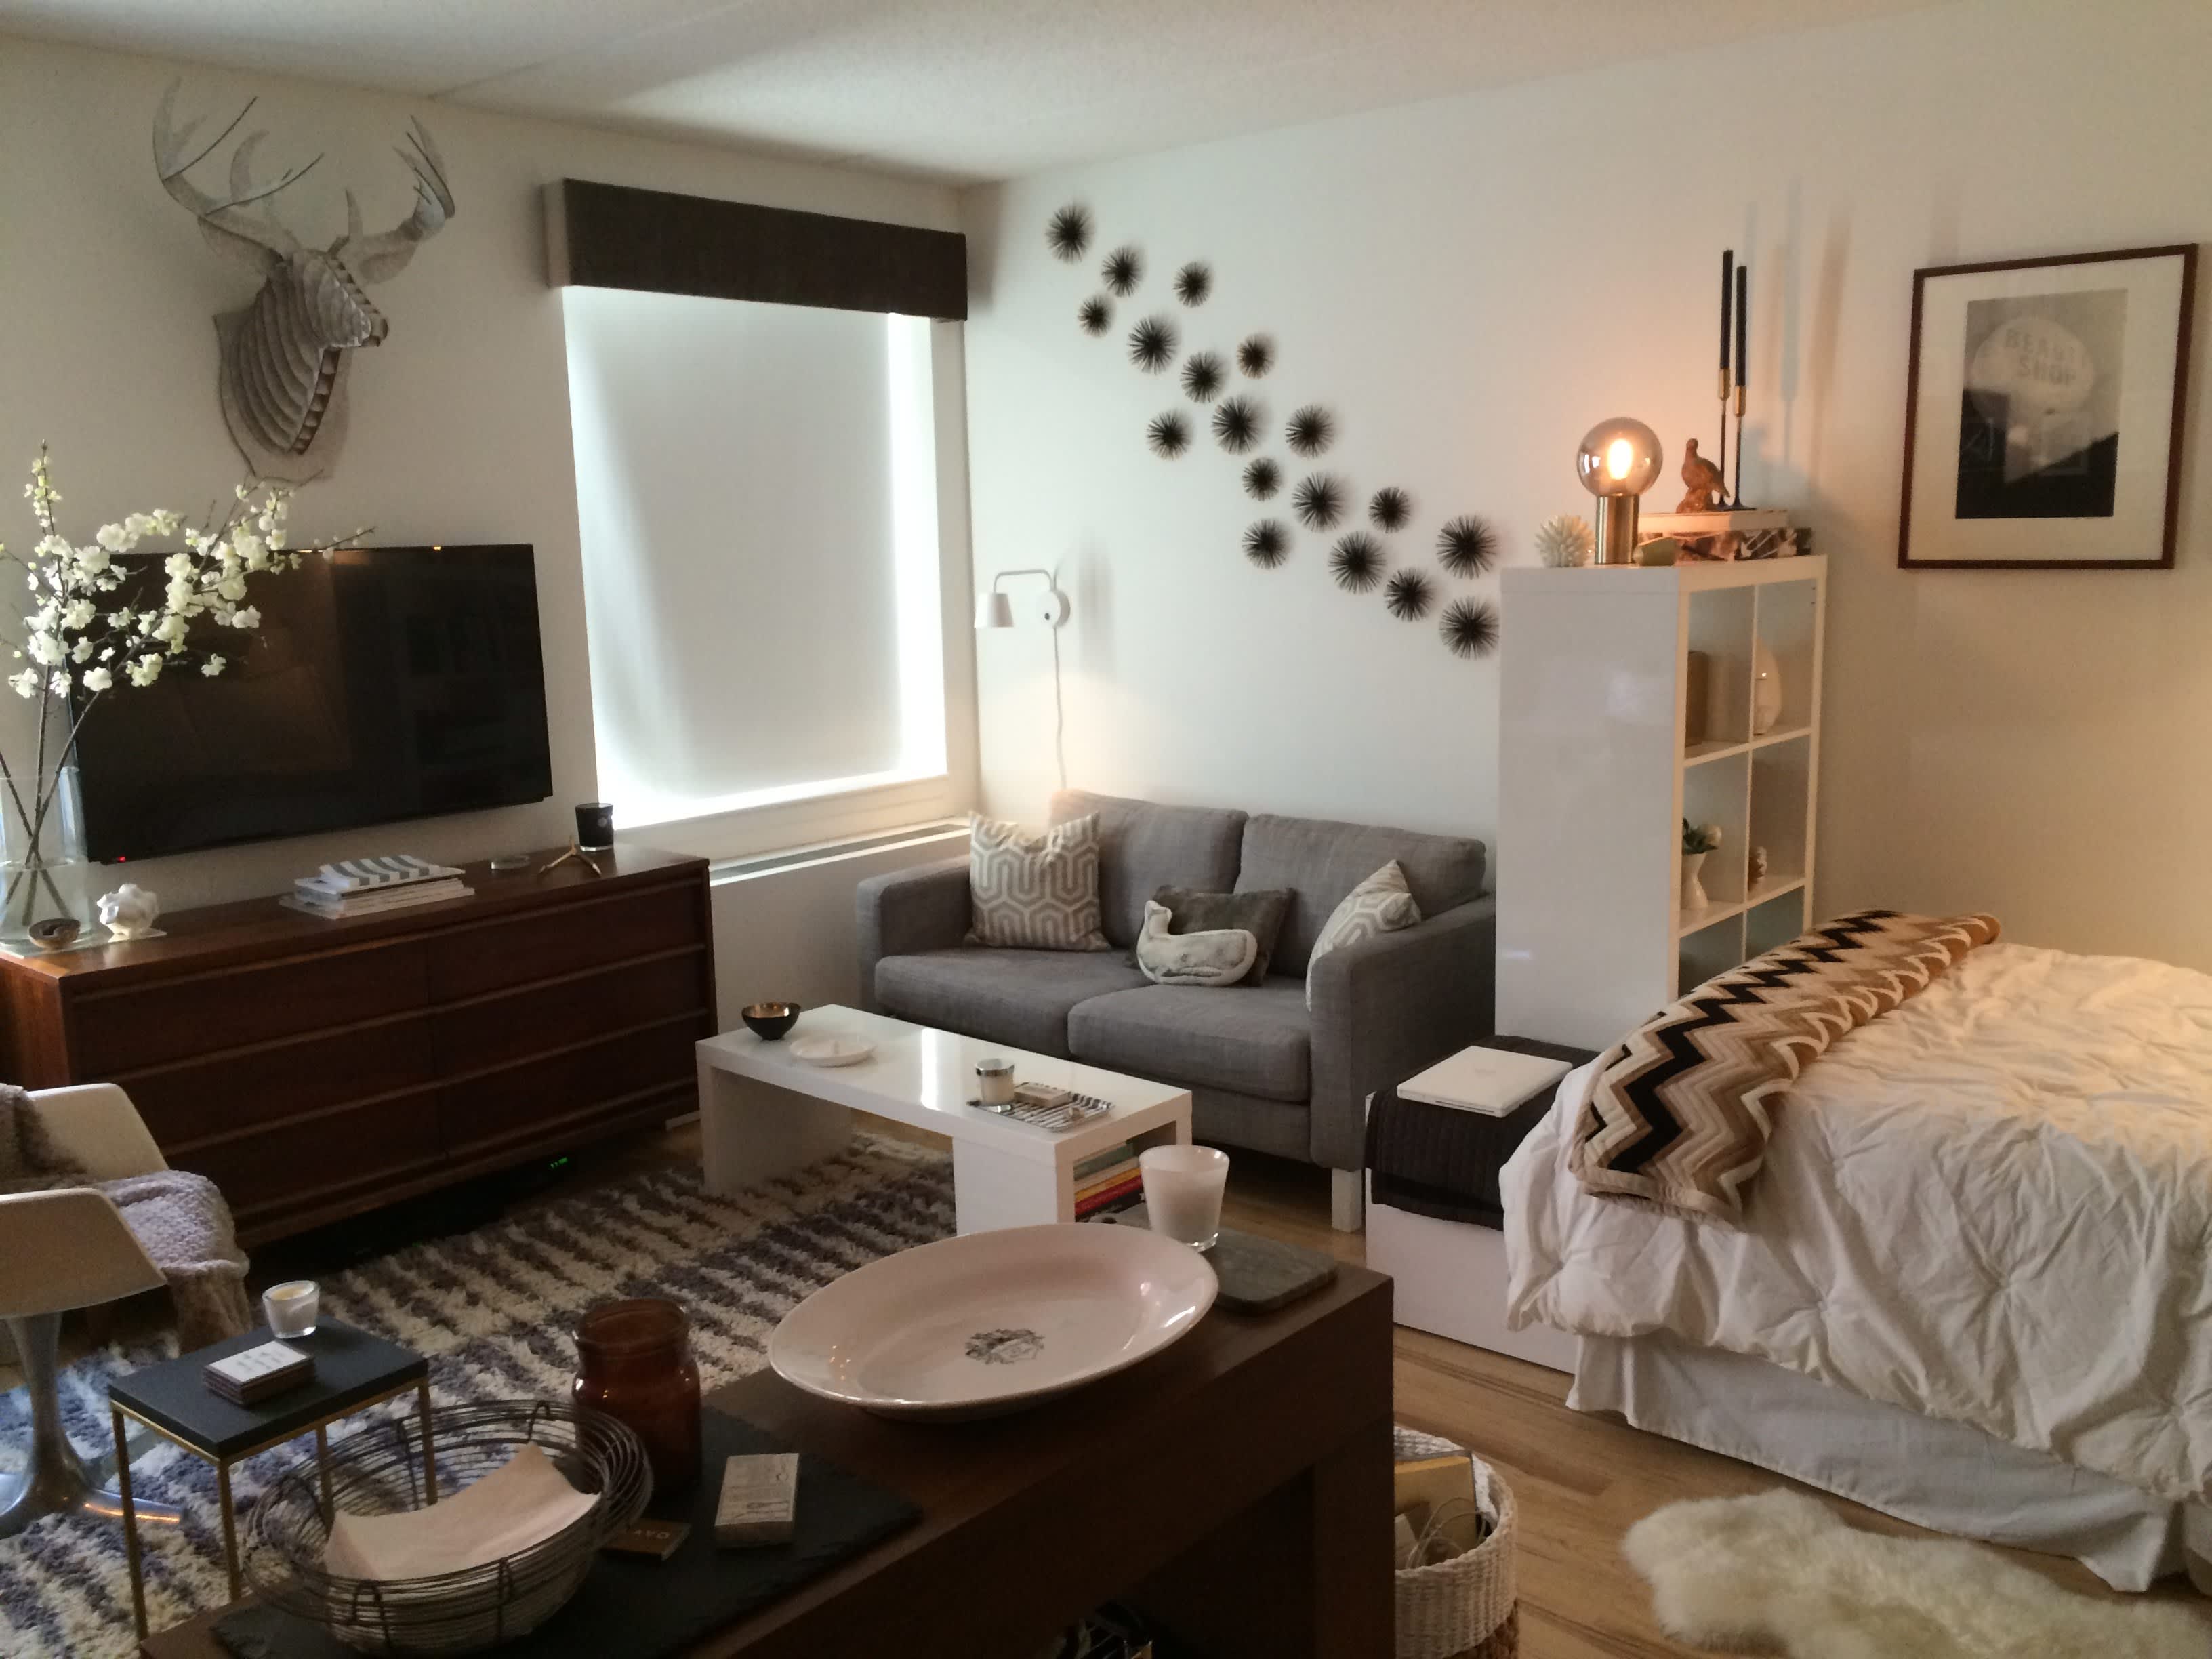 Living Room Set Up For Studio Apartment